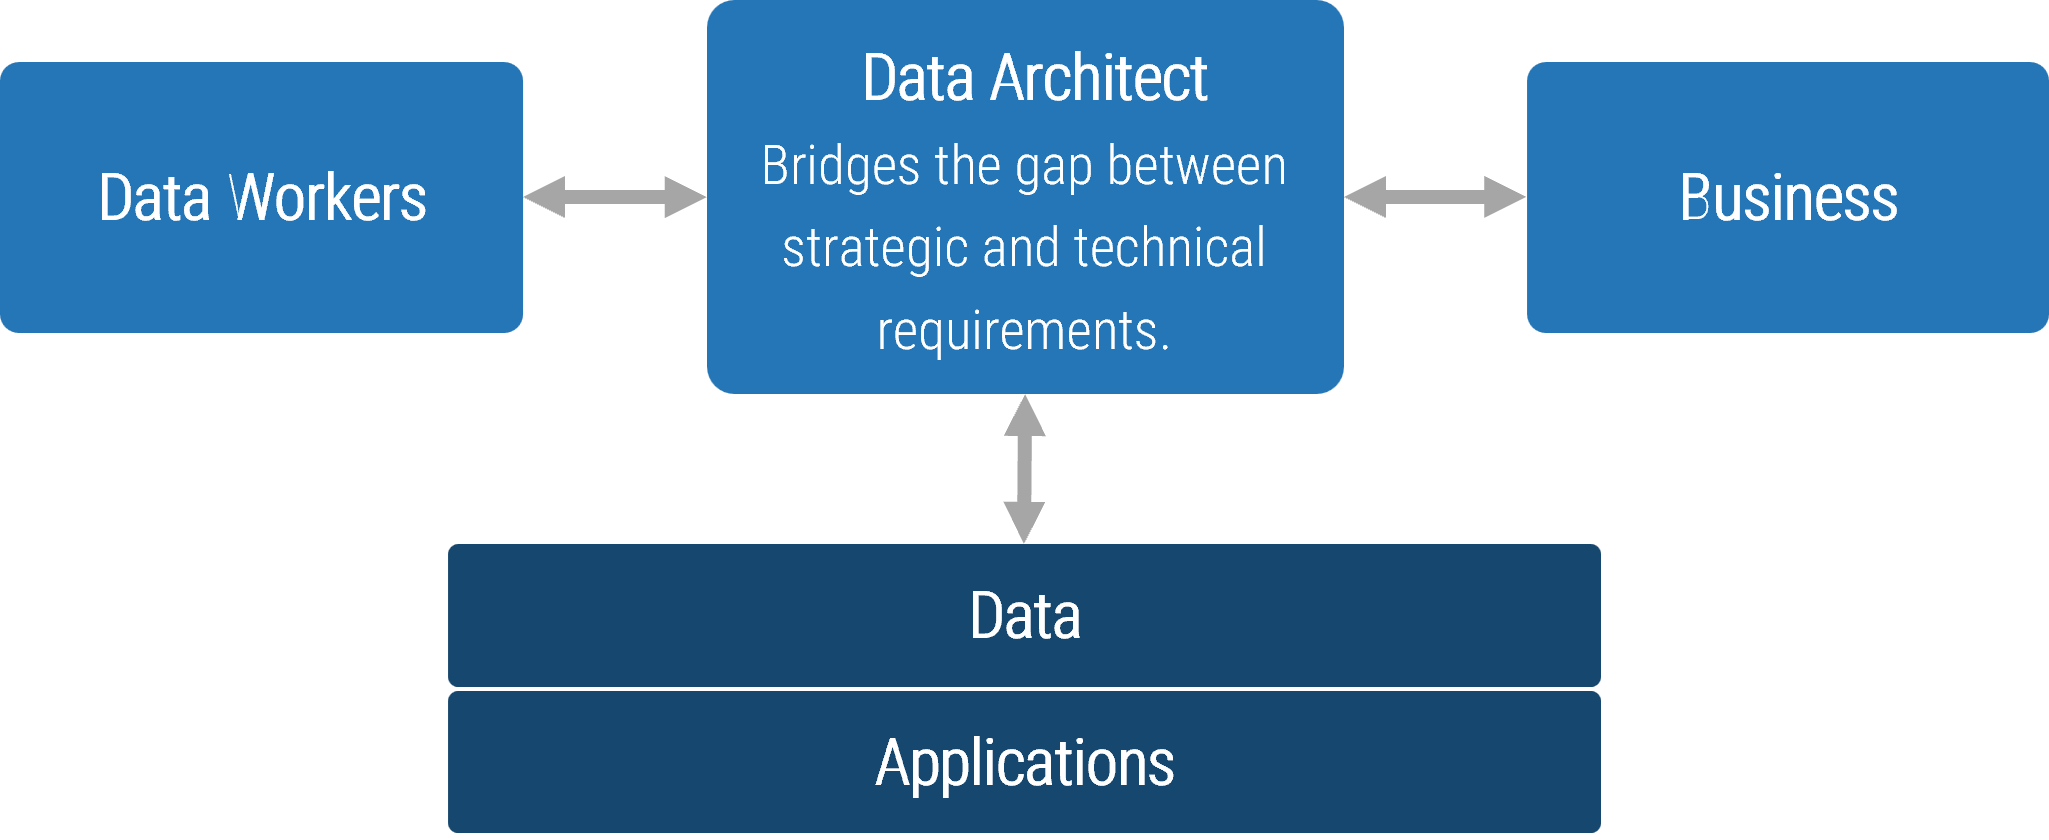 Data architect